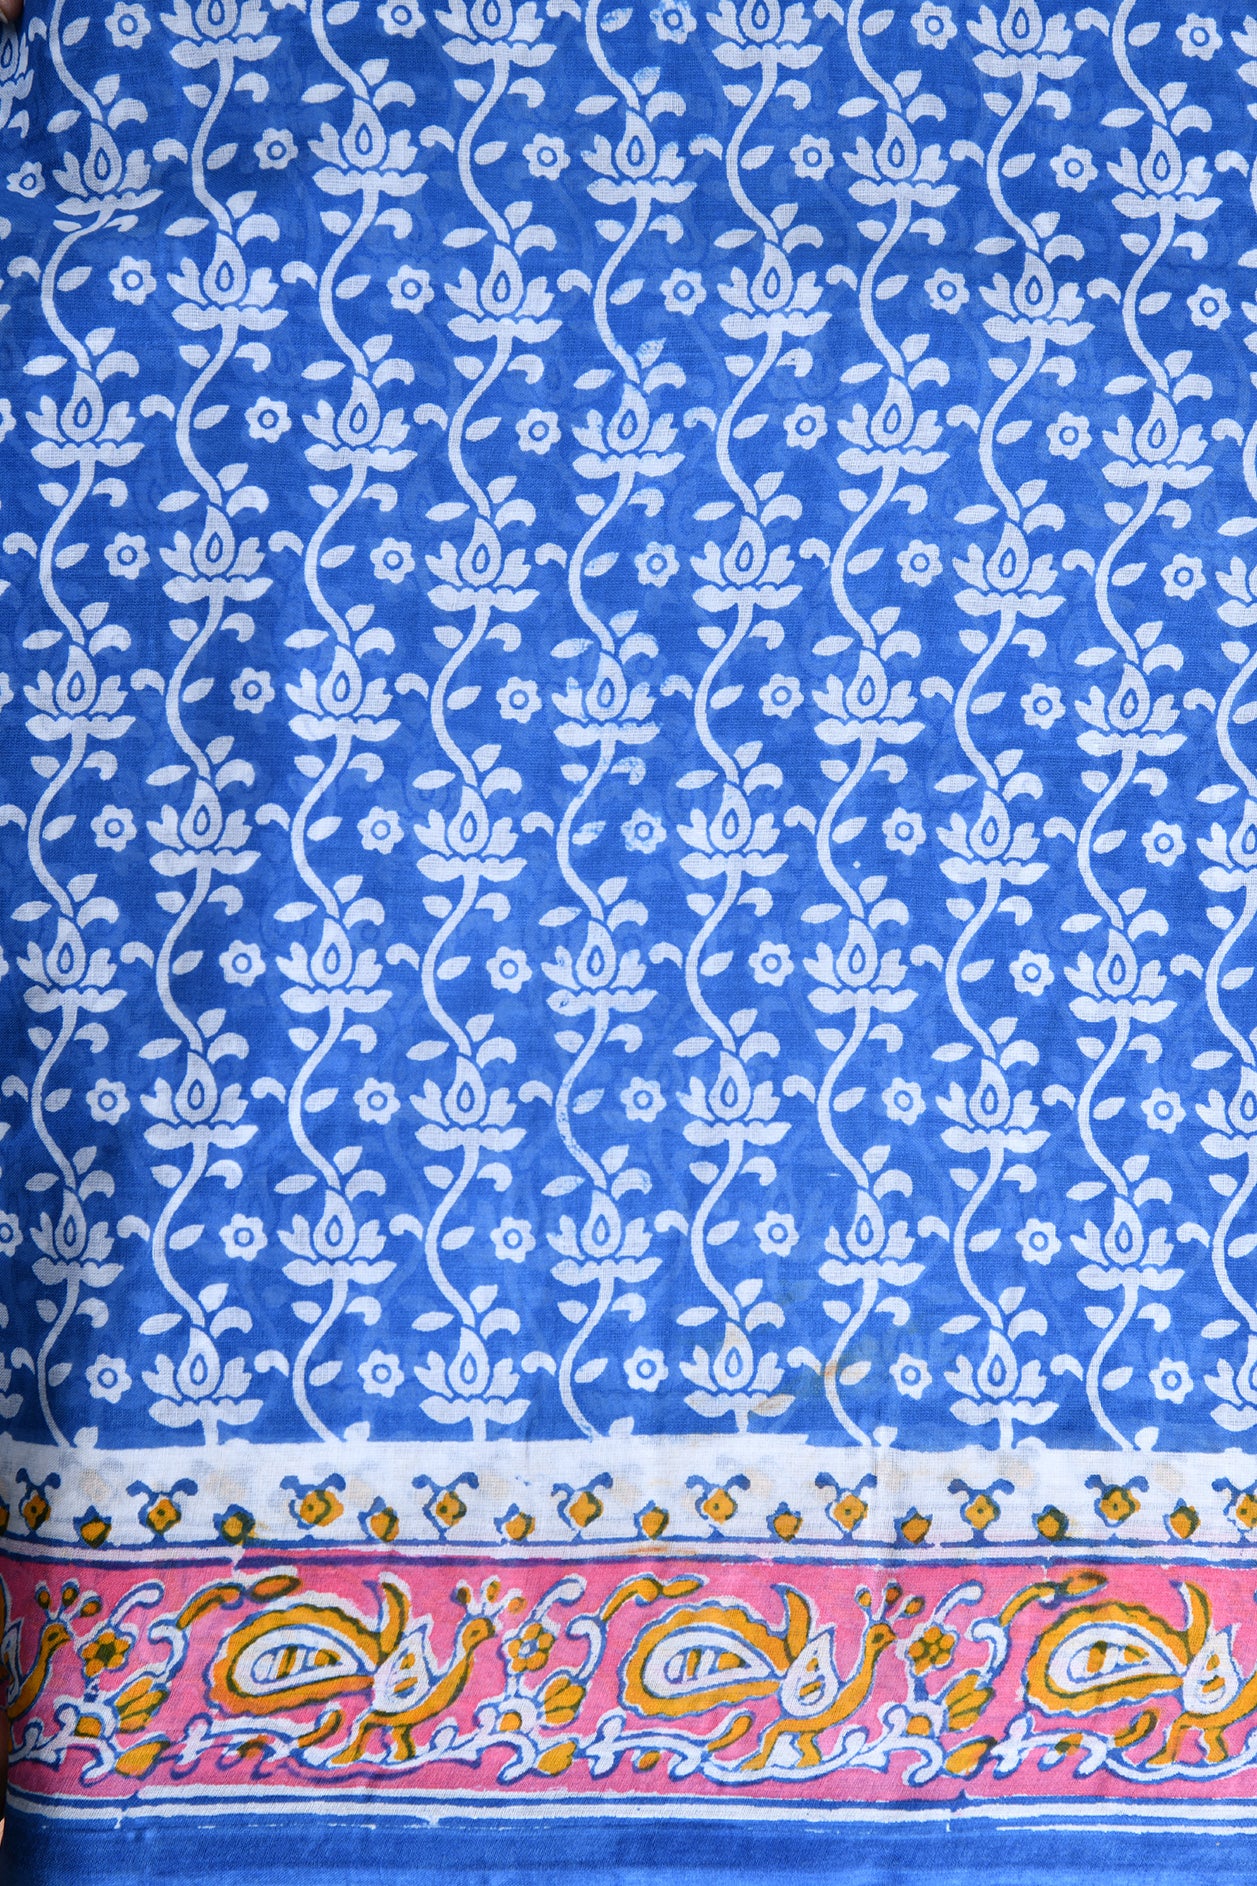 Floral Design Blue Hyderabad Cotton Saree